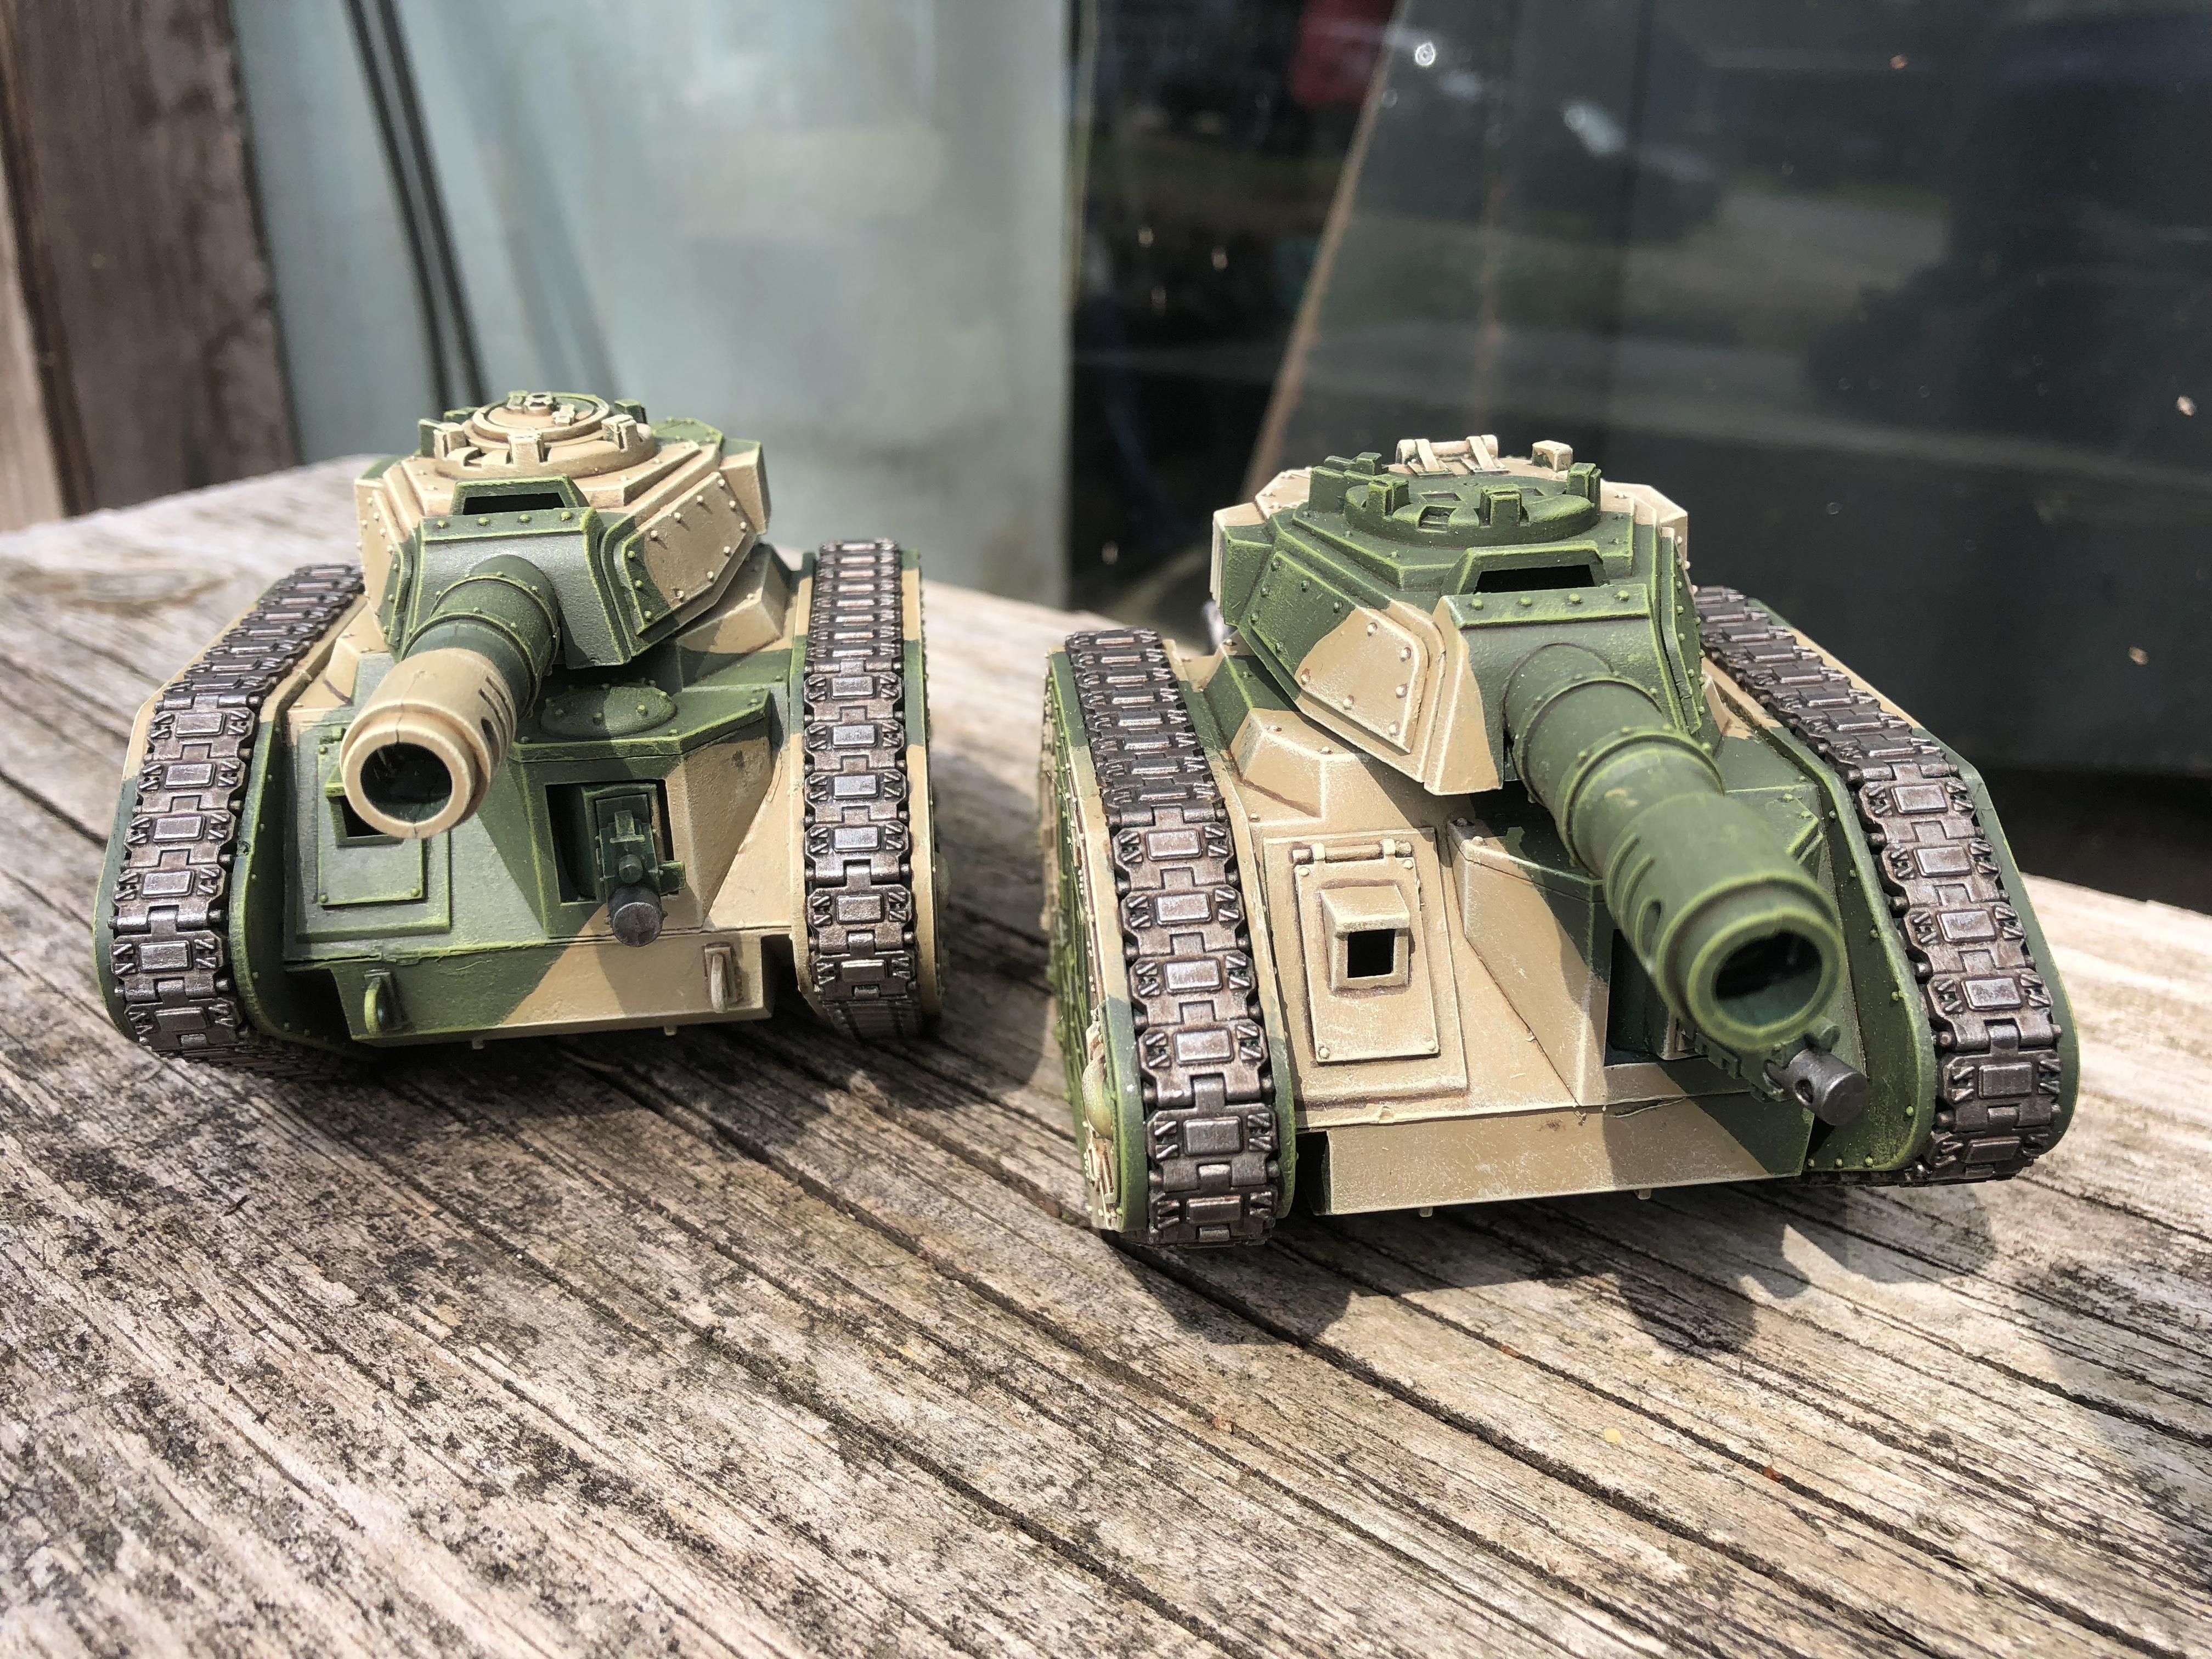 battle tanks